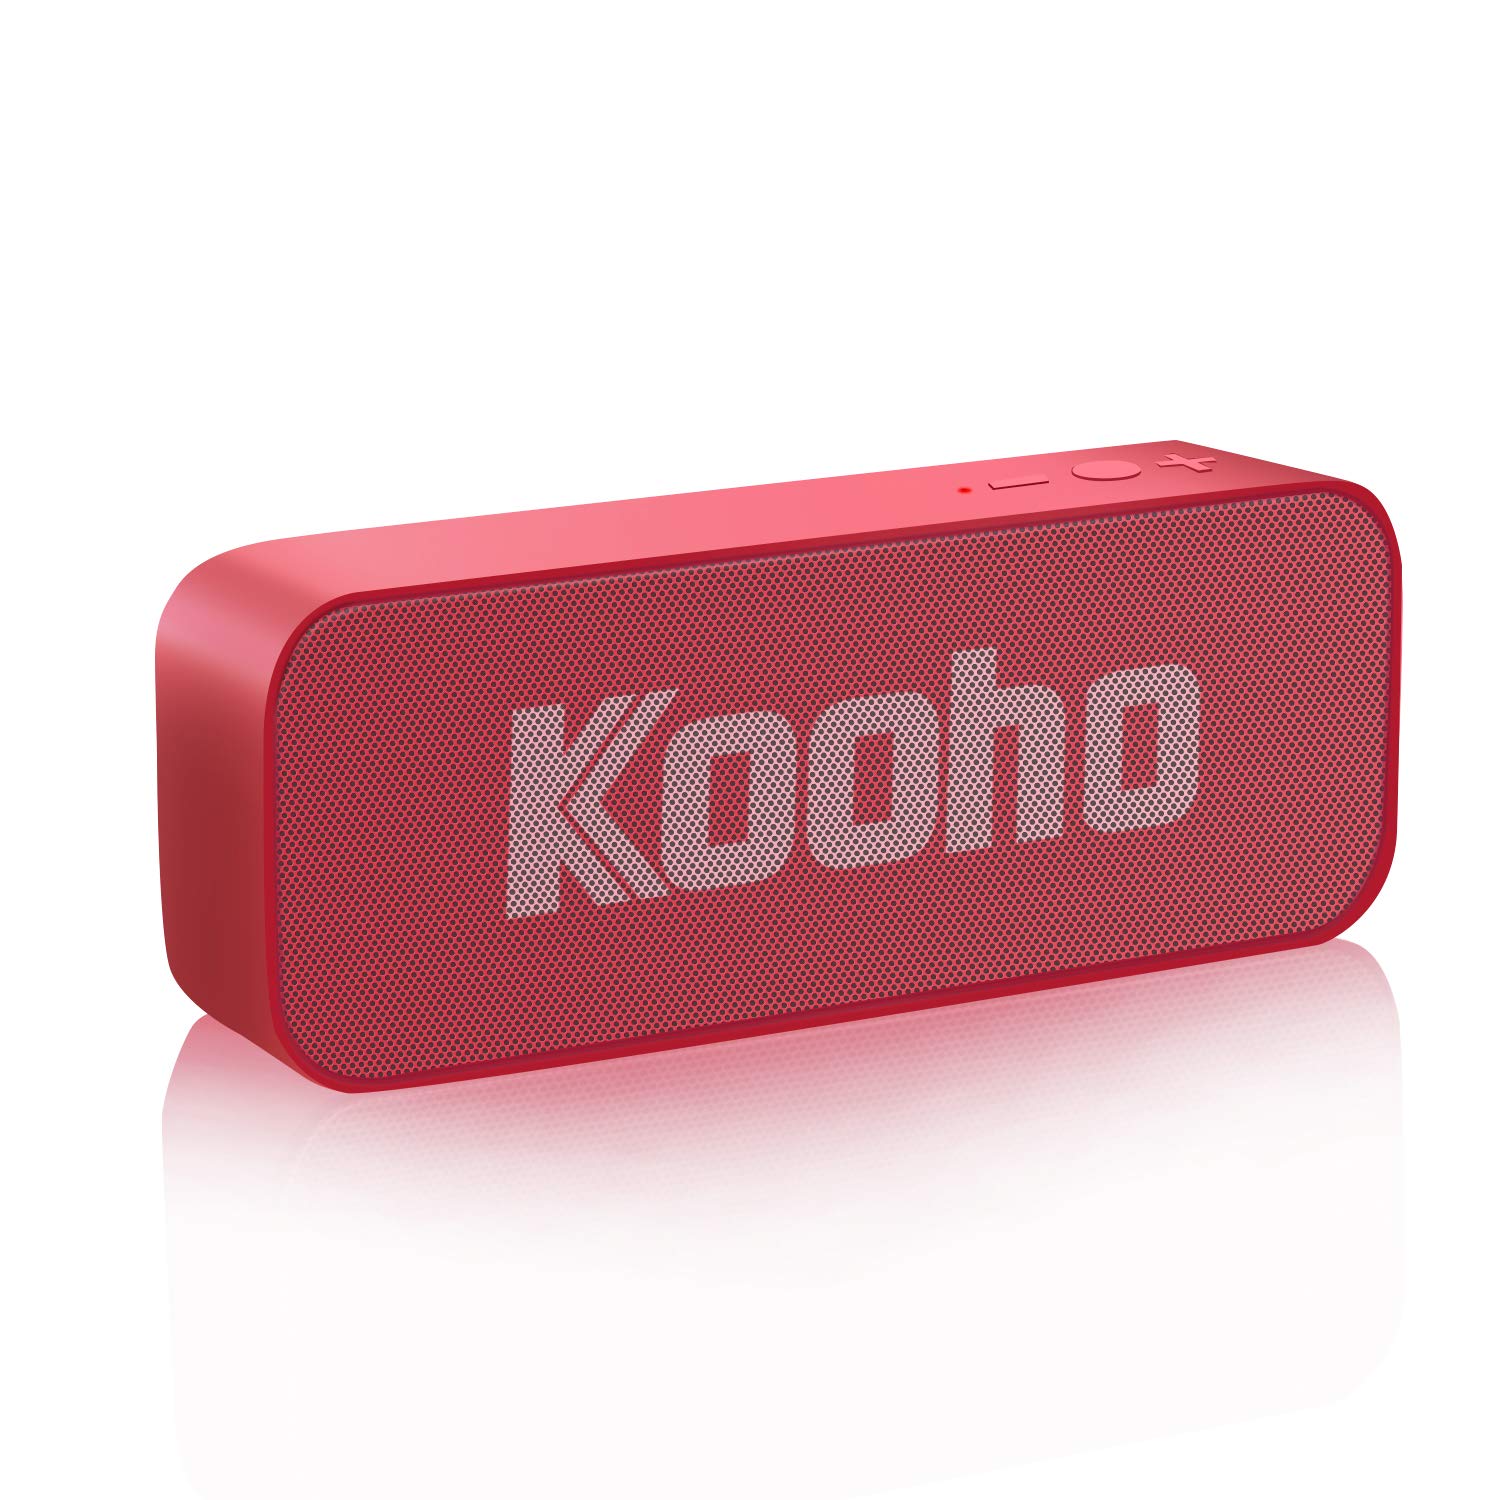 Altavoz Bluetooth portátil Kooho solo 10,8€